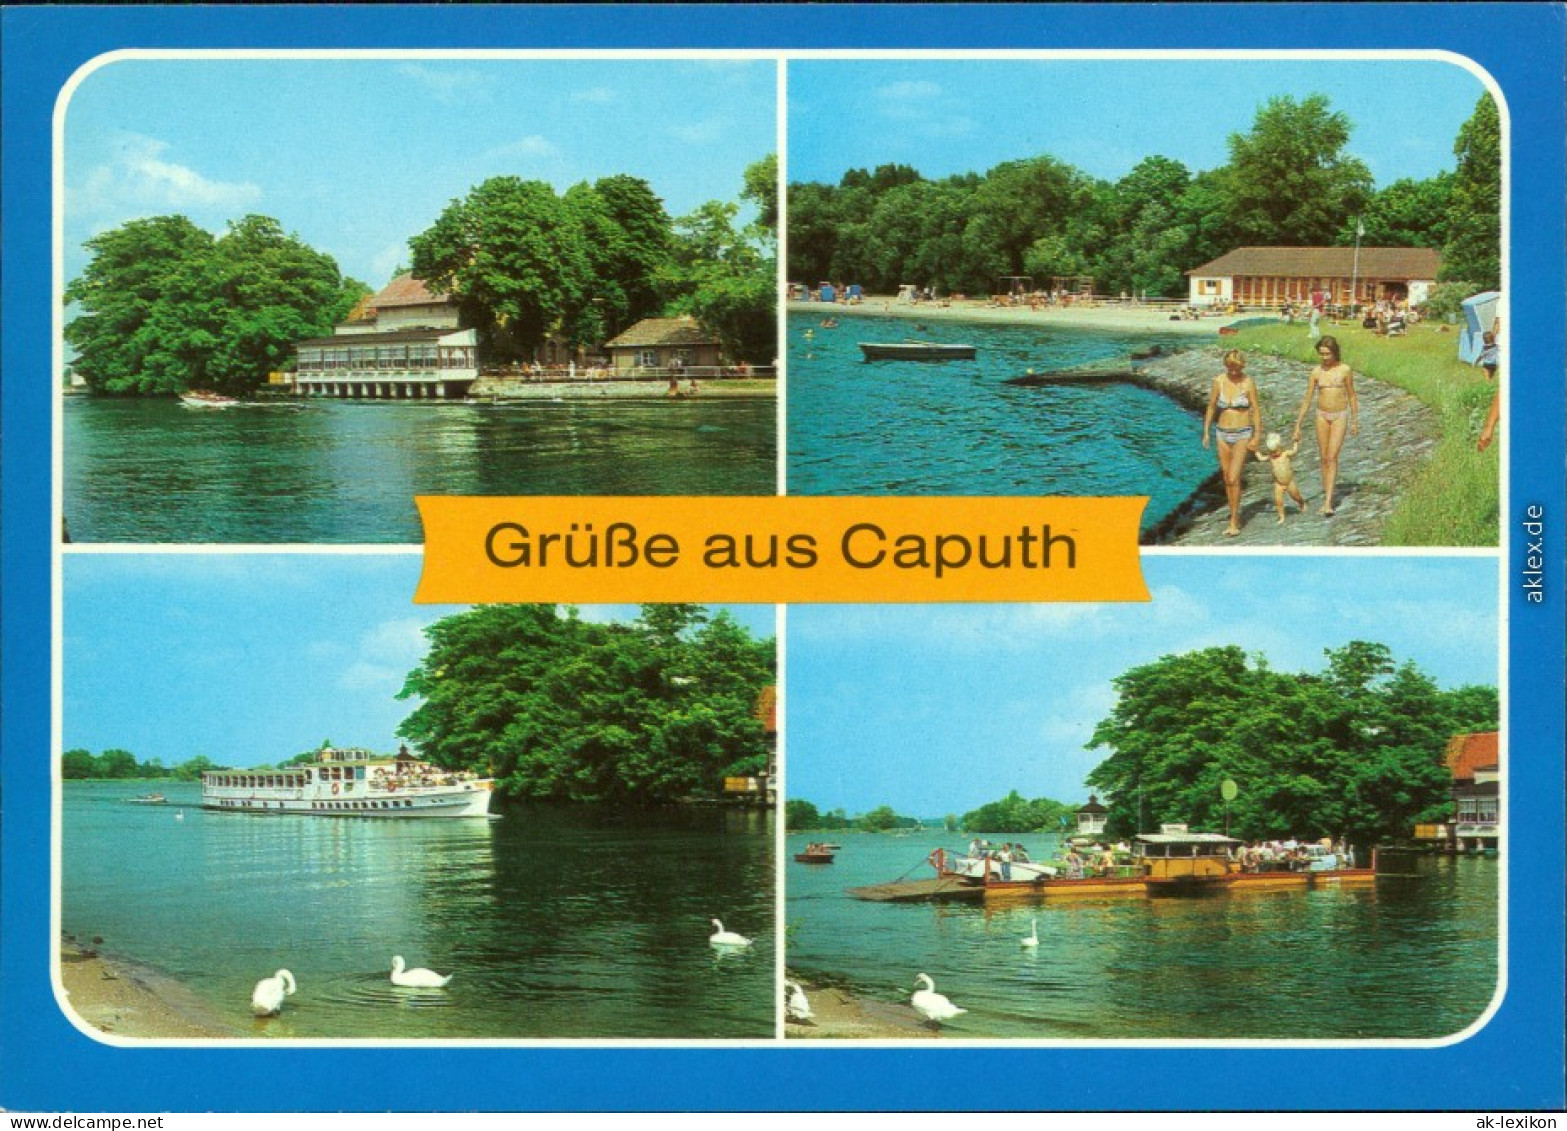 Caputh Schwielowsee Gaststätte Am Fährhaus, Strandbad, MS Seebad   Fähre 1983 - Caputh